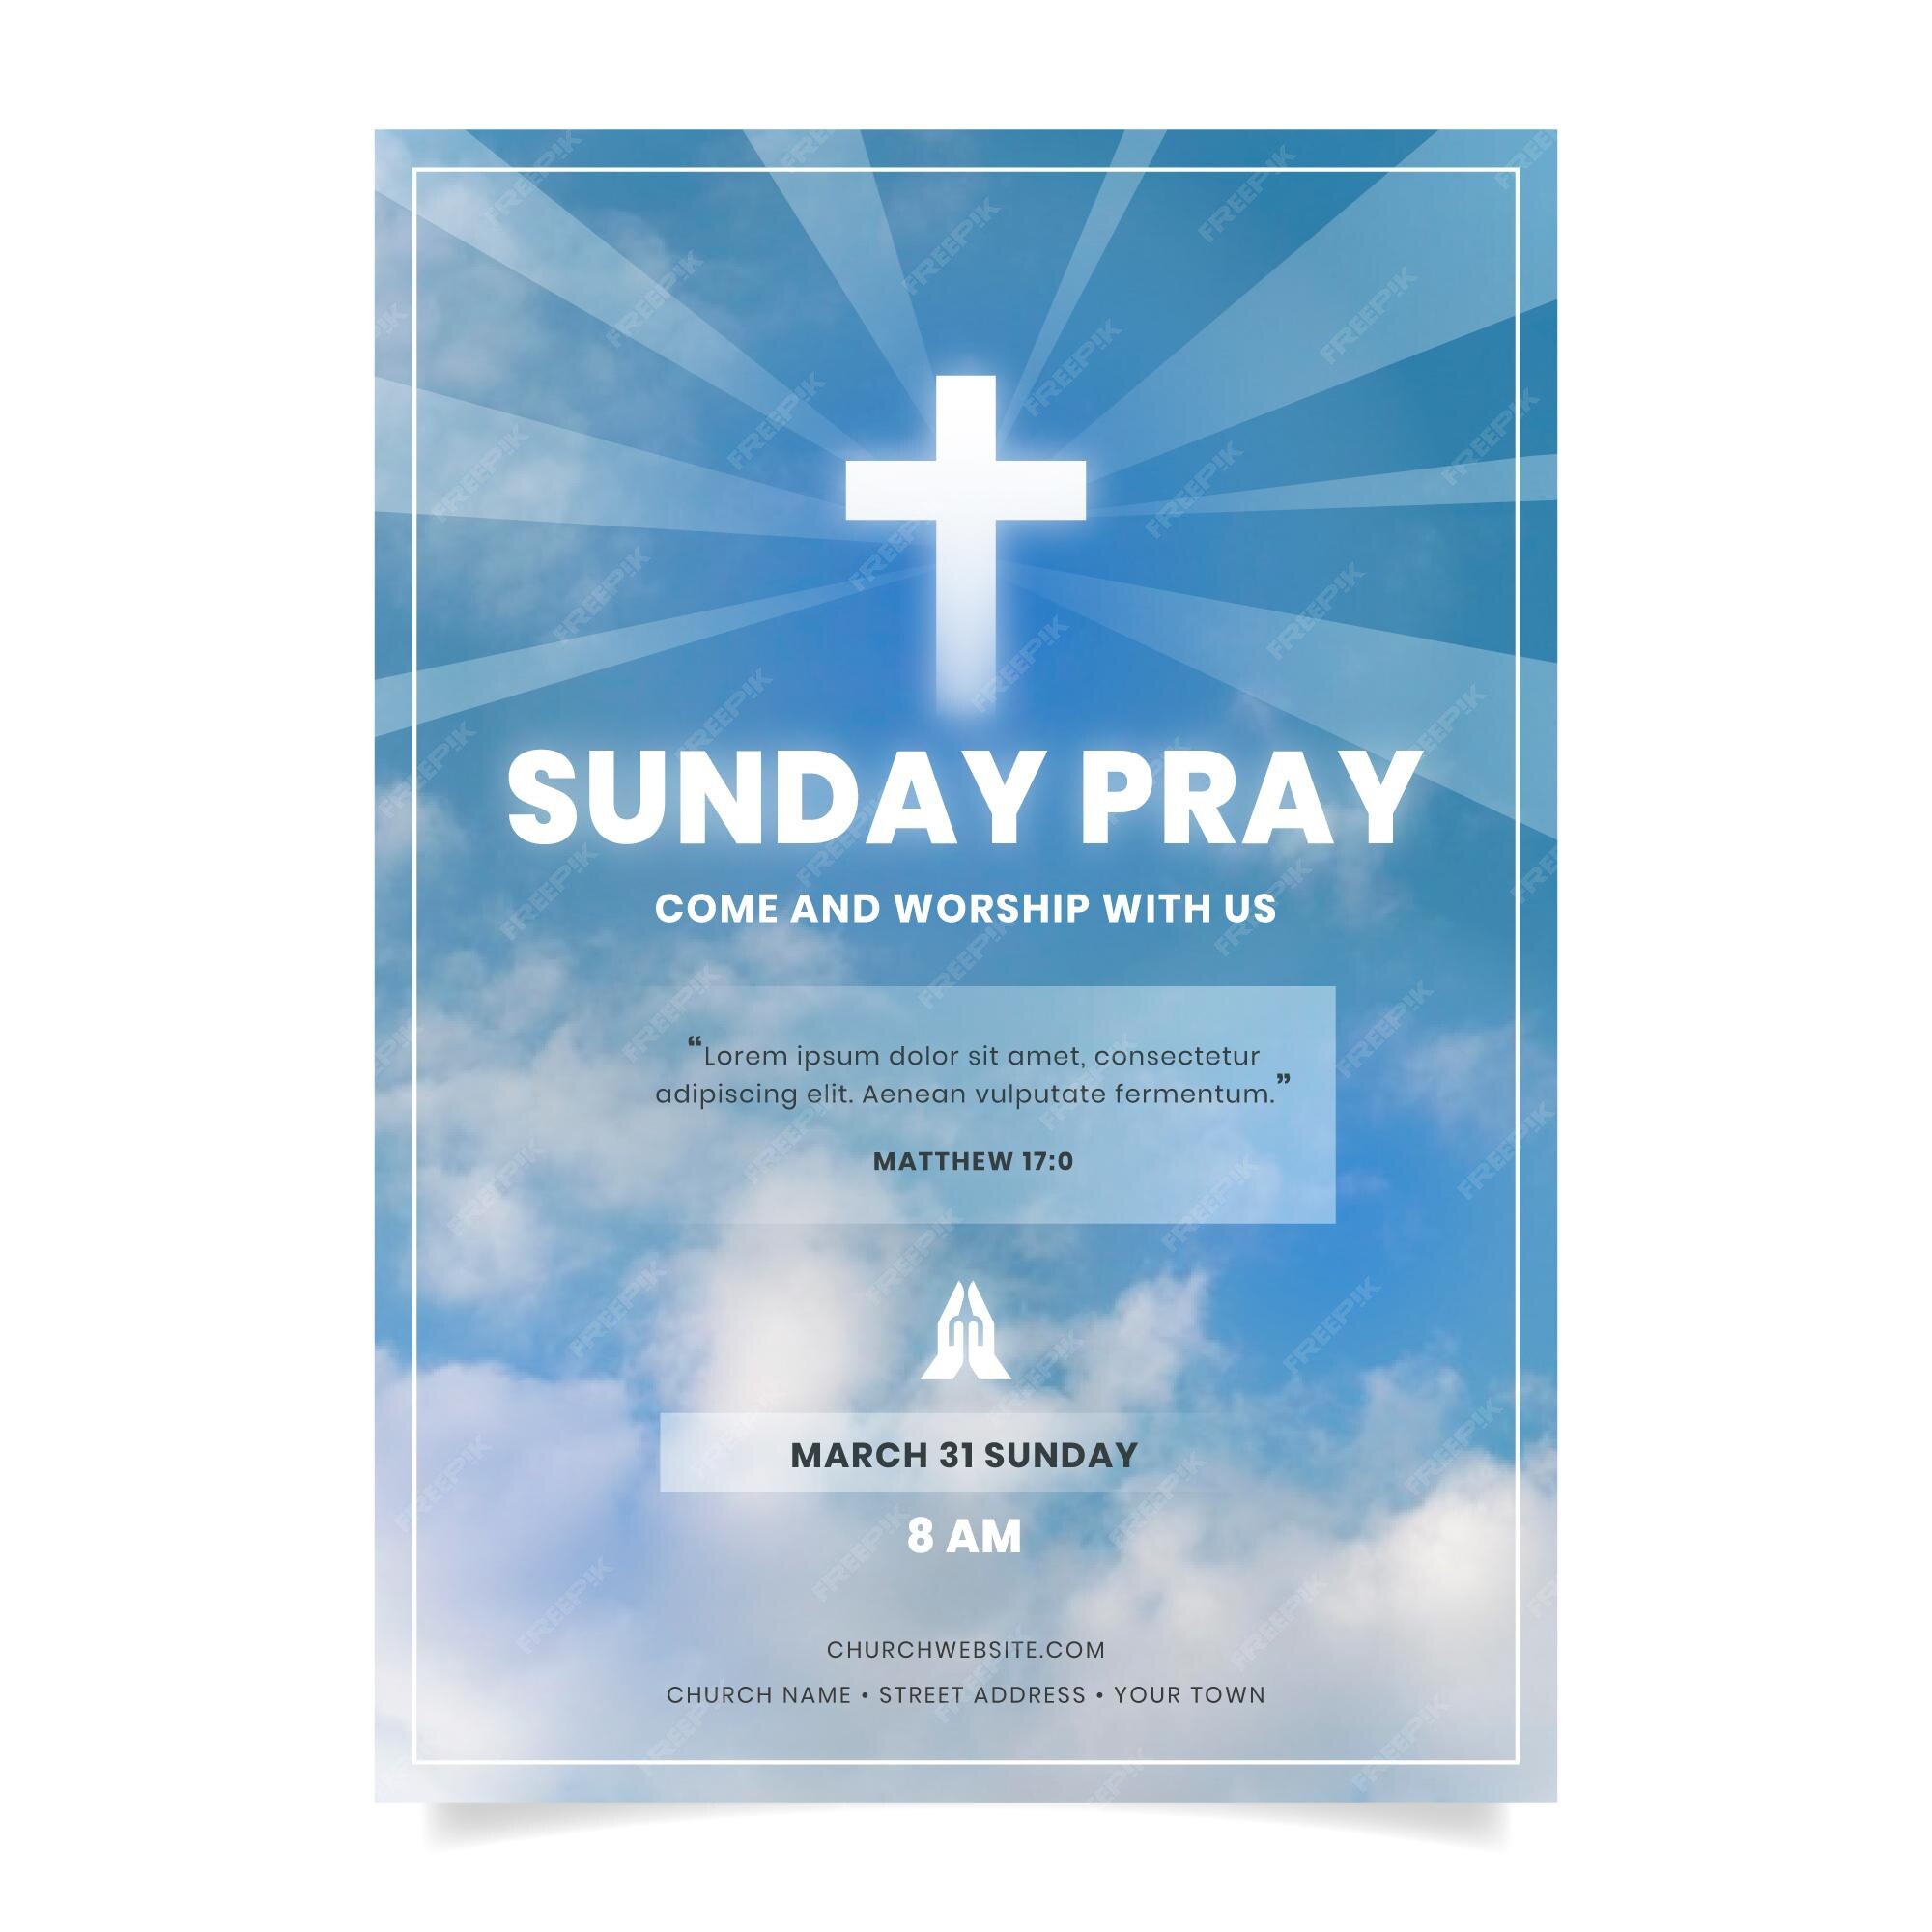 Sunday Service Images - Free Download on Freepik